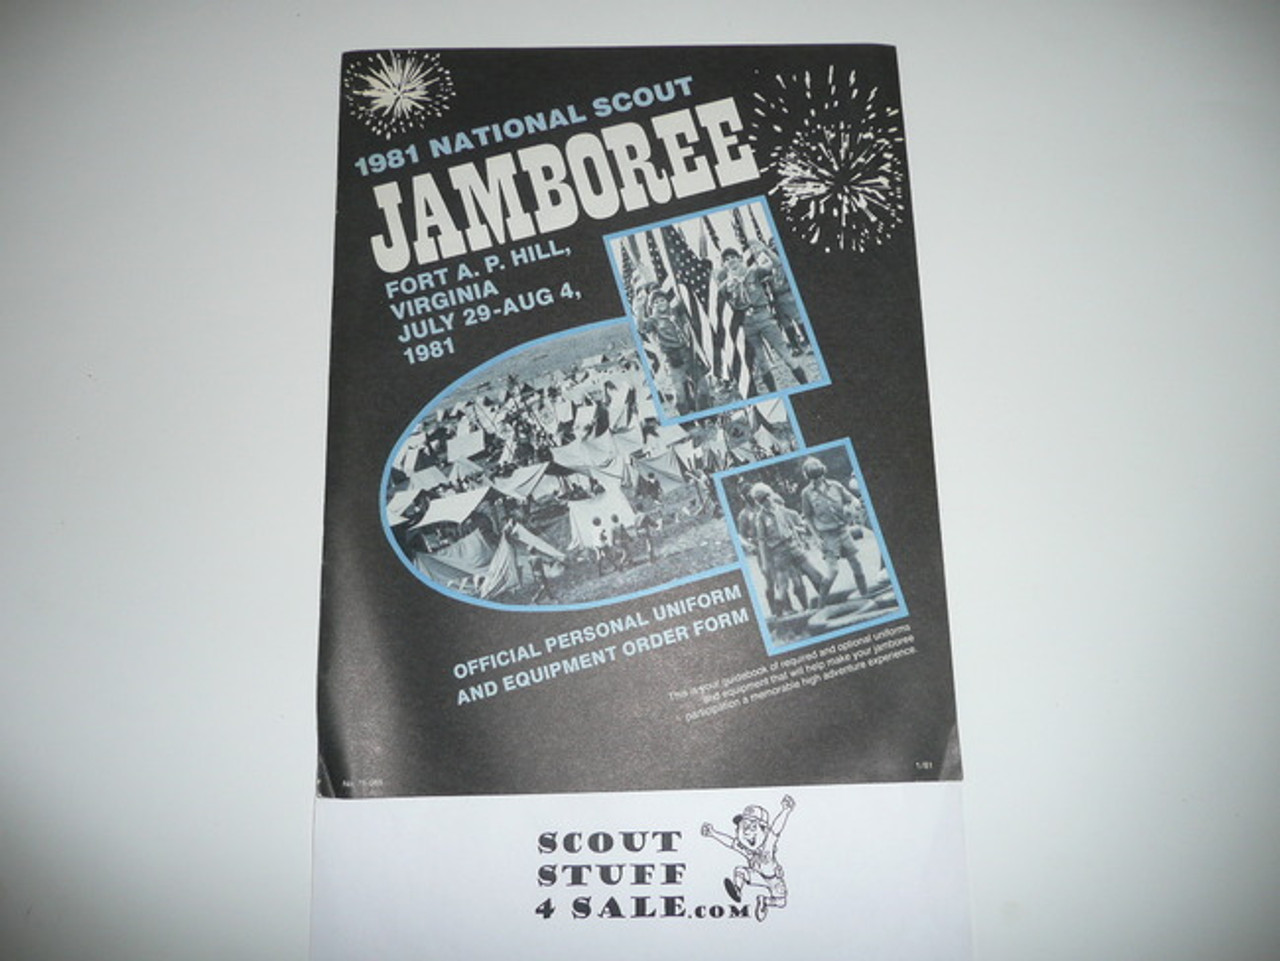 1981 National Jamboree Uniform and Equipment Catalog and Order Form